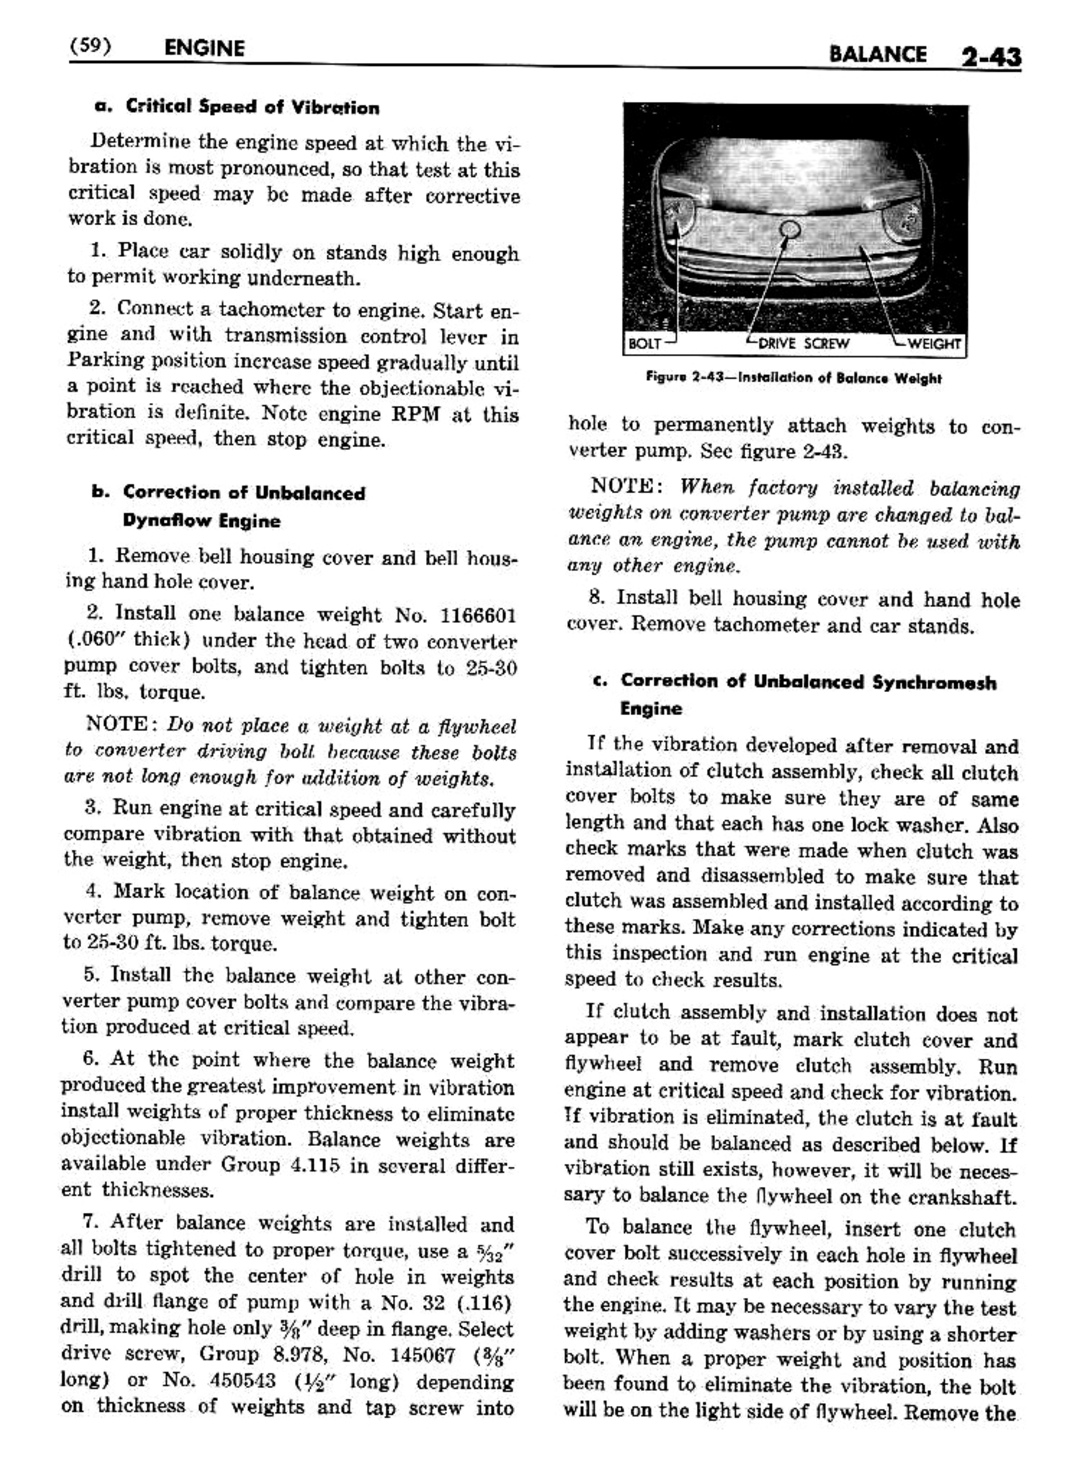 n_03 1956 Buick Shop Manual - Engine-043-043.jpg